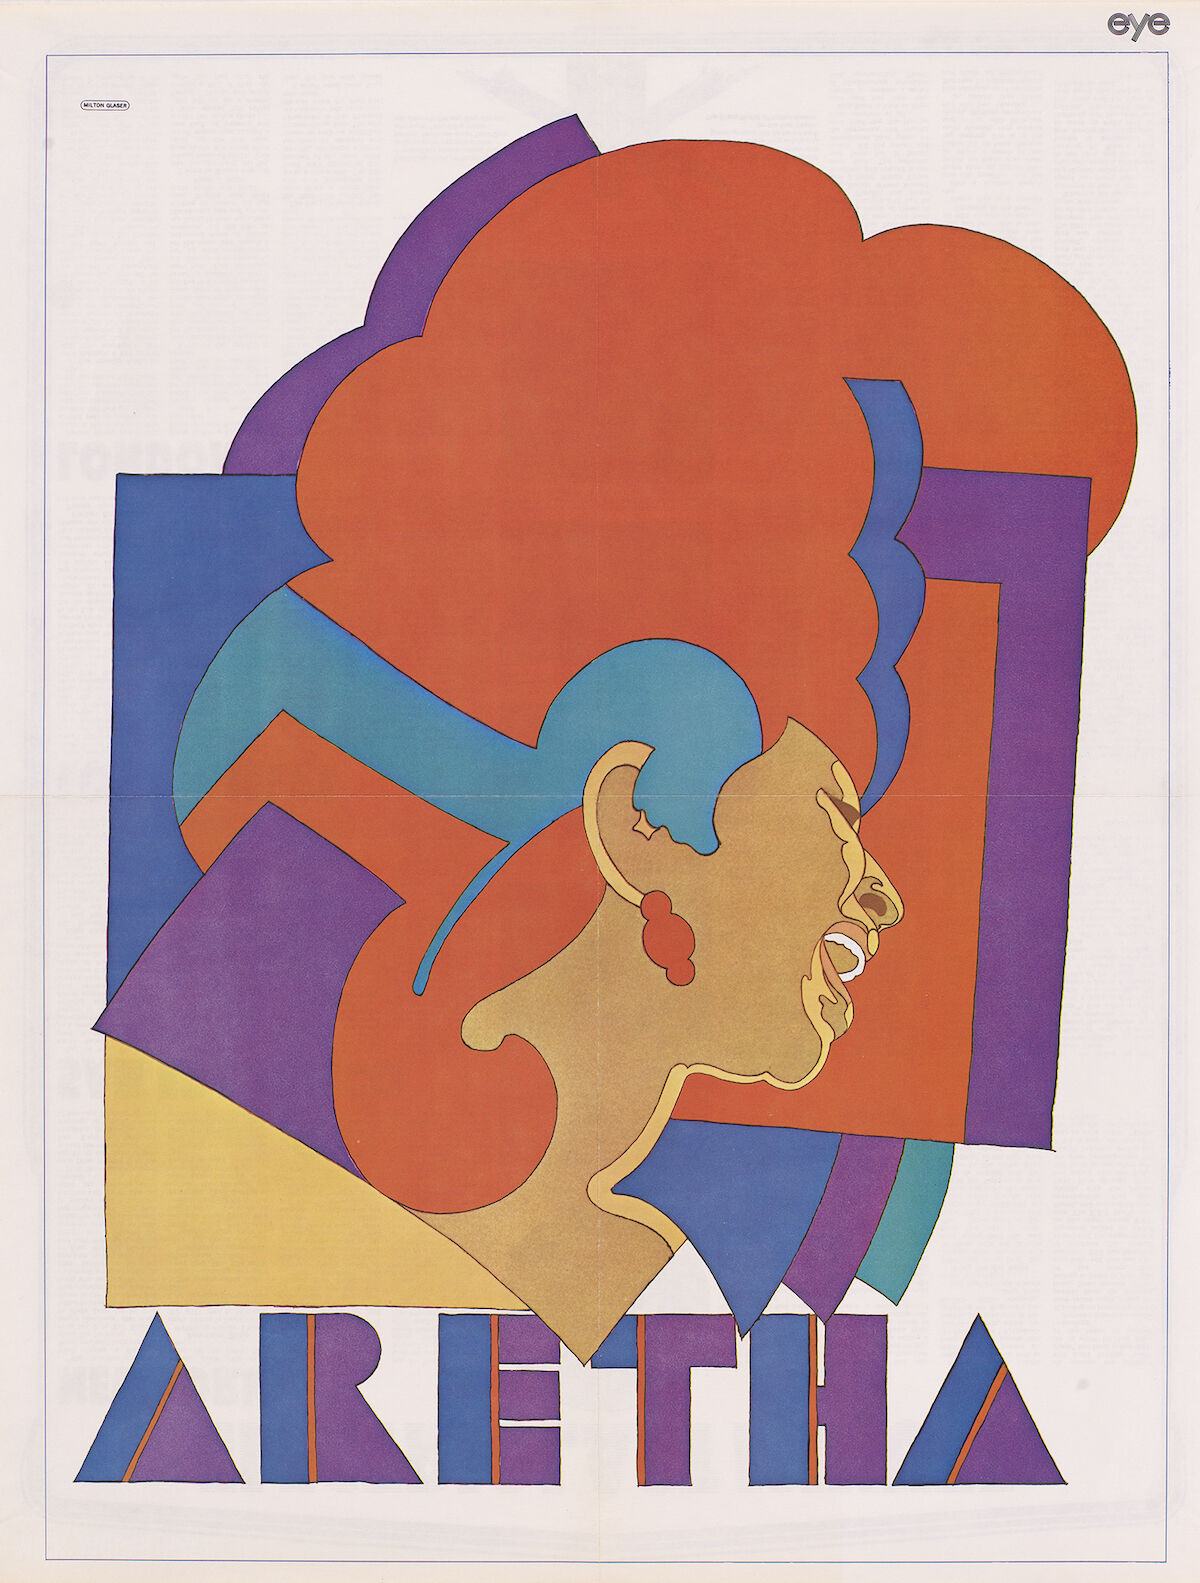 Aretha Franklin por Milton Glaser, póster fotolitográfico en color, 1968. Cortesía de la National Portrait Gallery, Smithsonian Institution;  © Milton Glaser